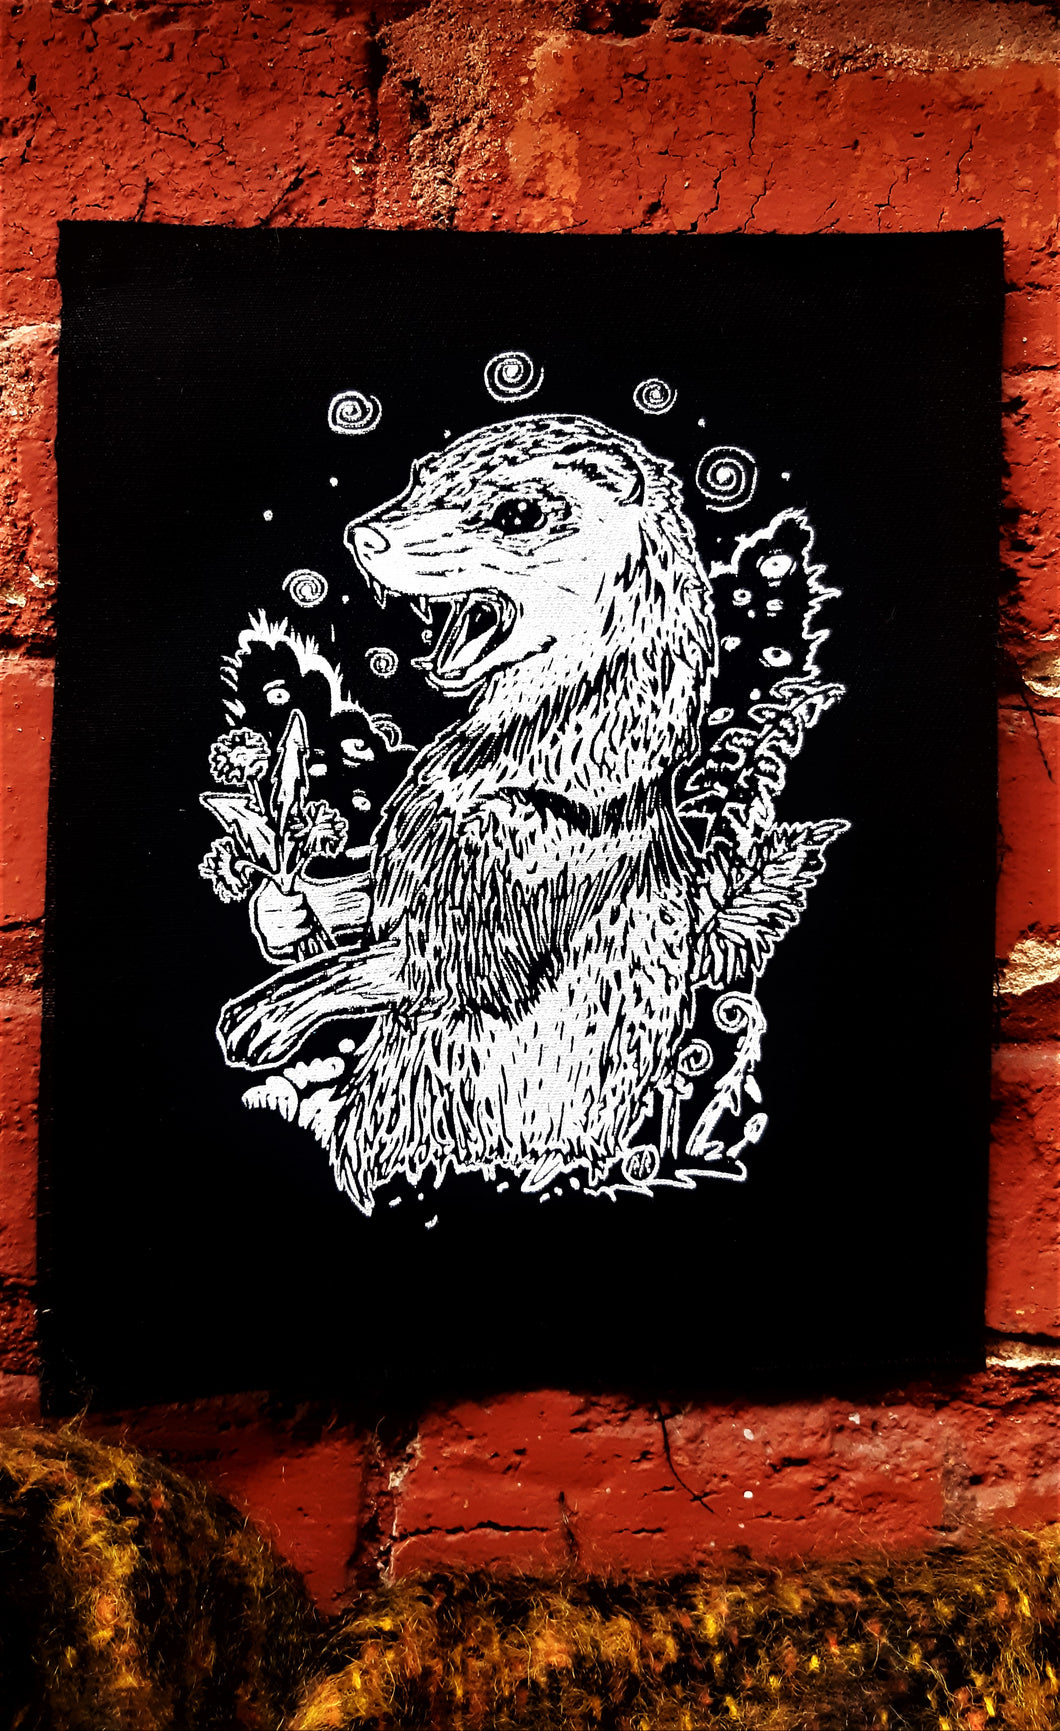 Wild ferret patch - Screen printing on black fabric